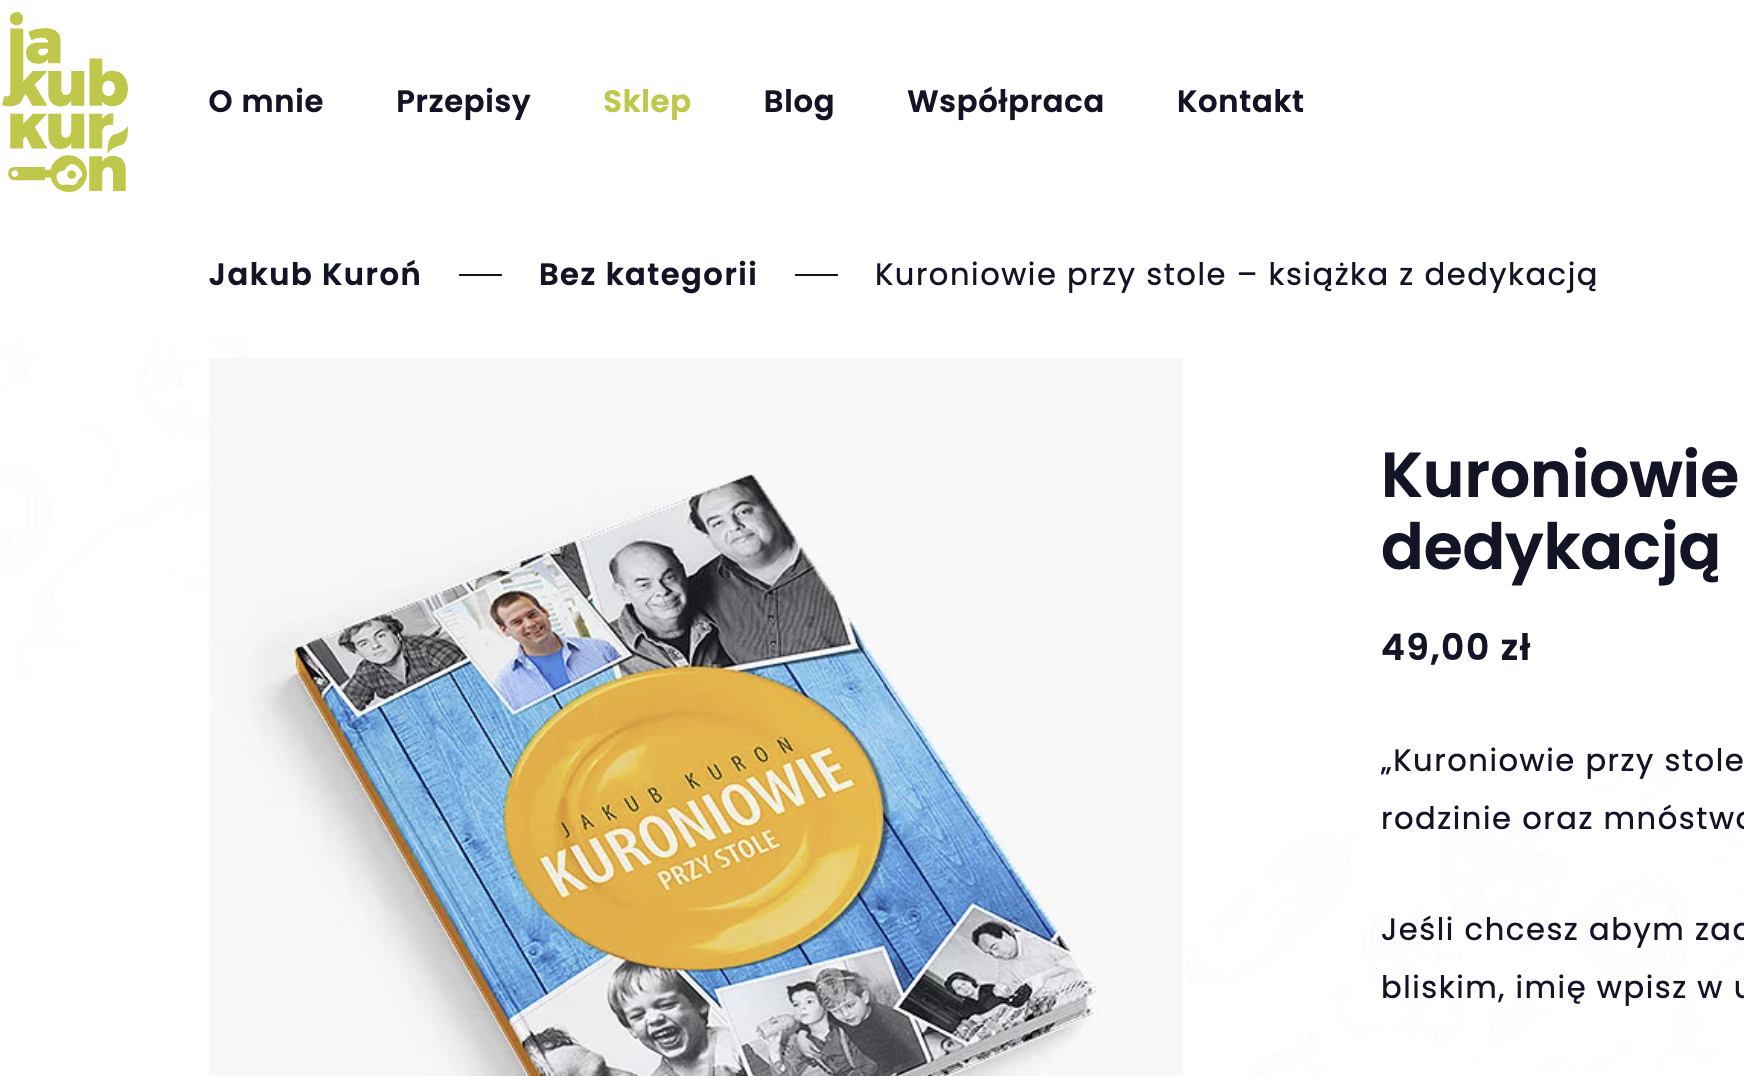 kuron.com.pl: widok sklepu internetowego